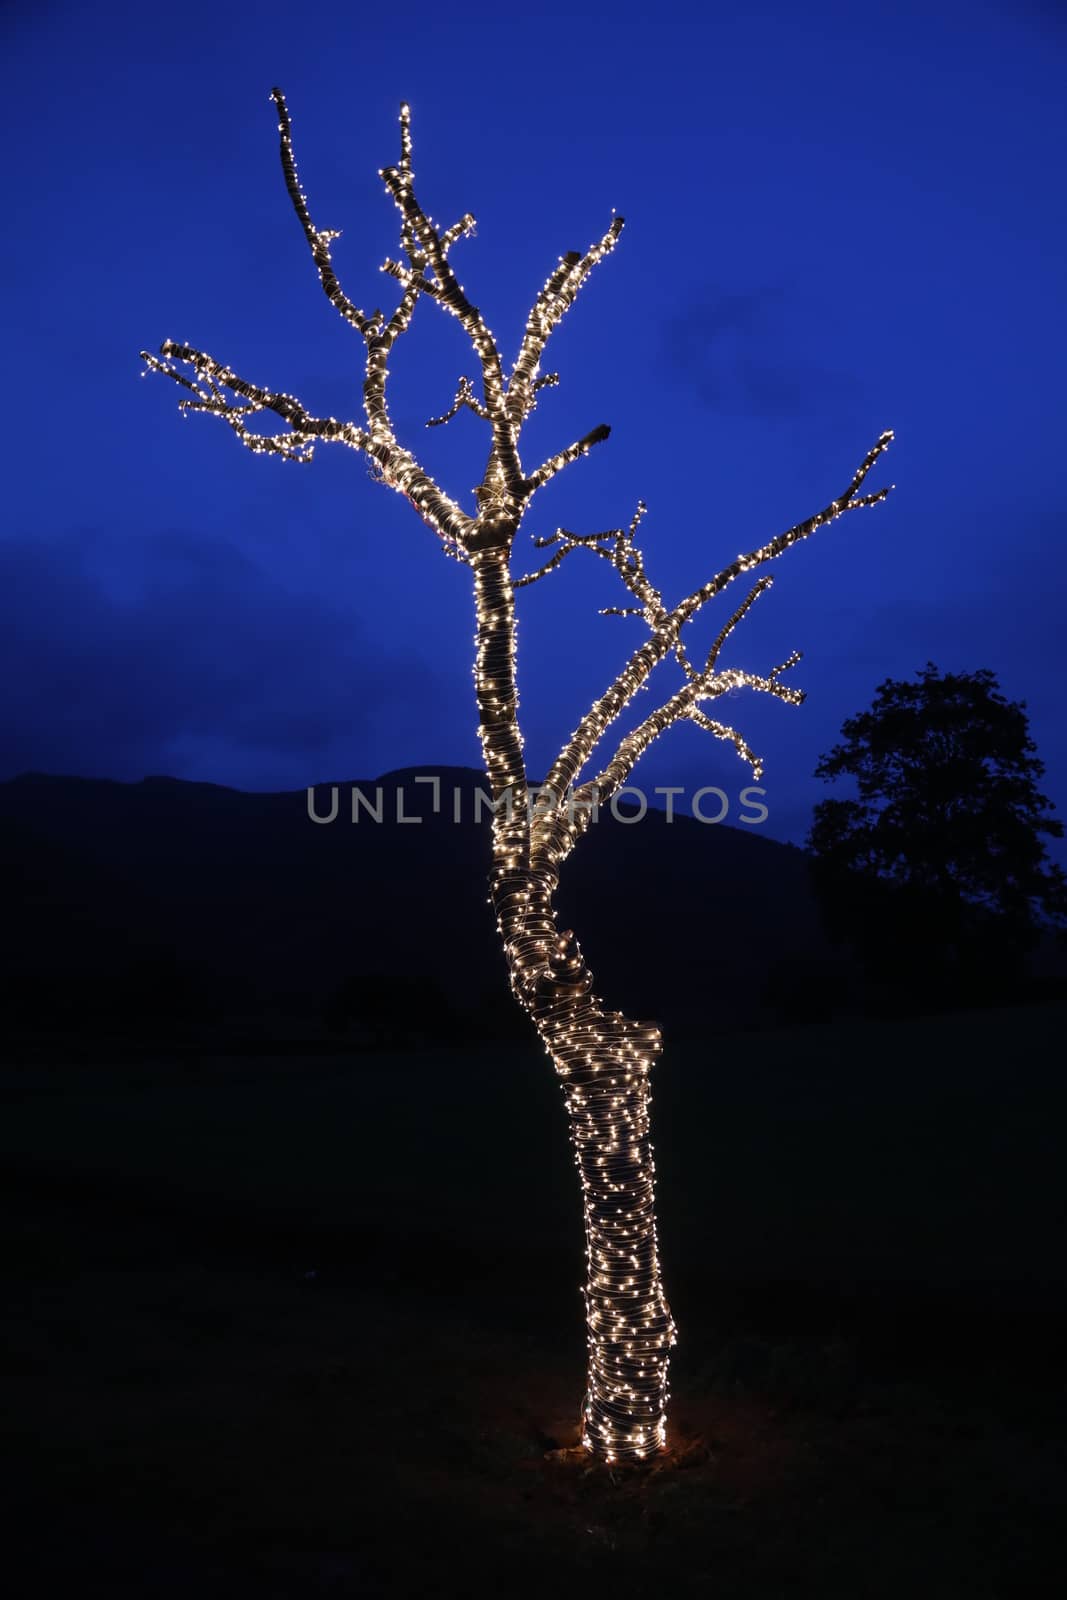 Lights Decoration on a tree